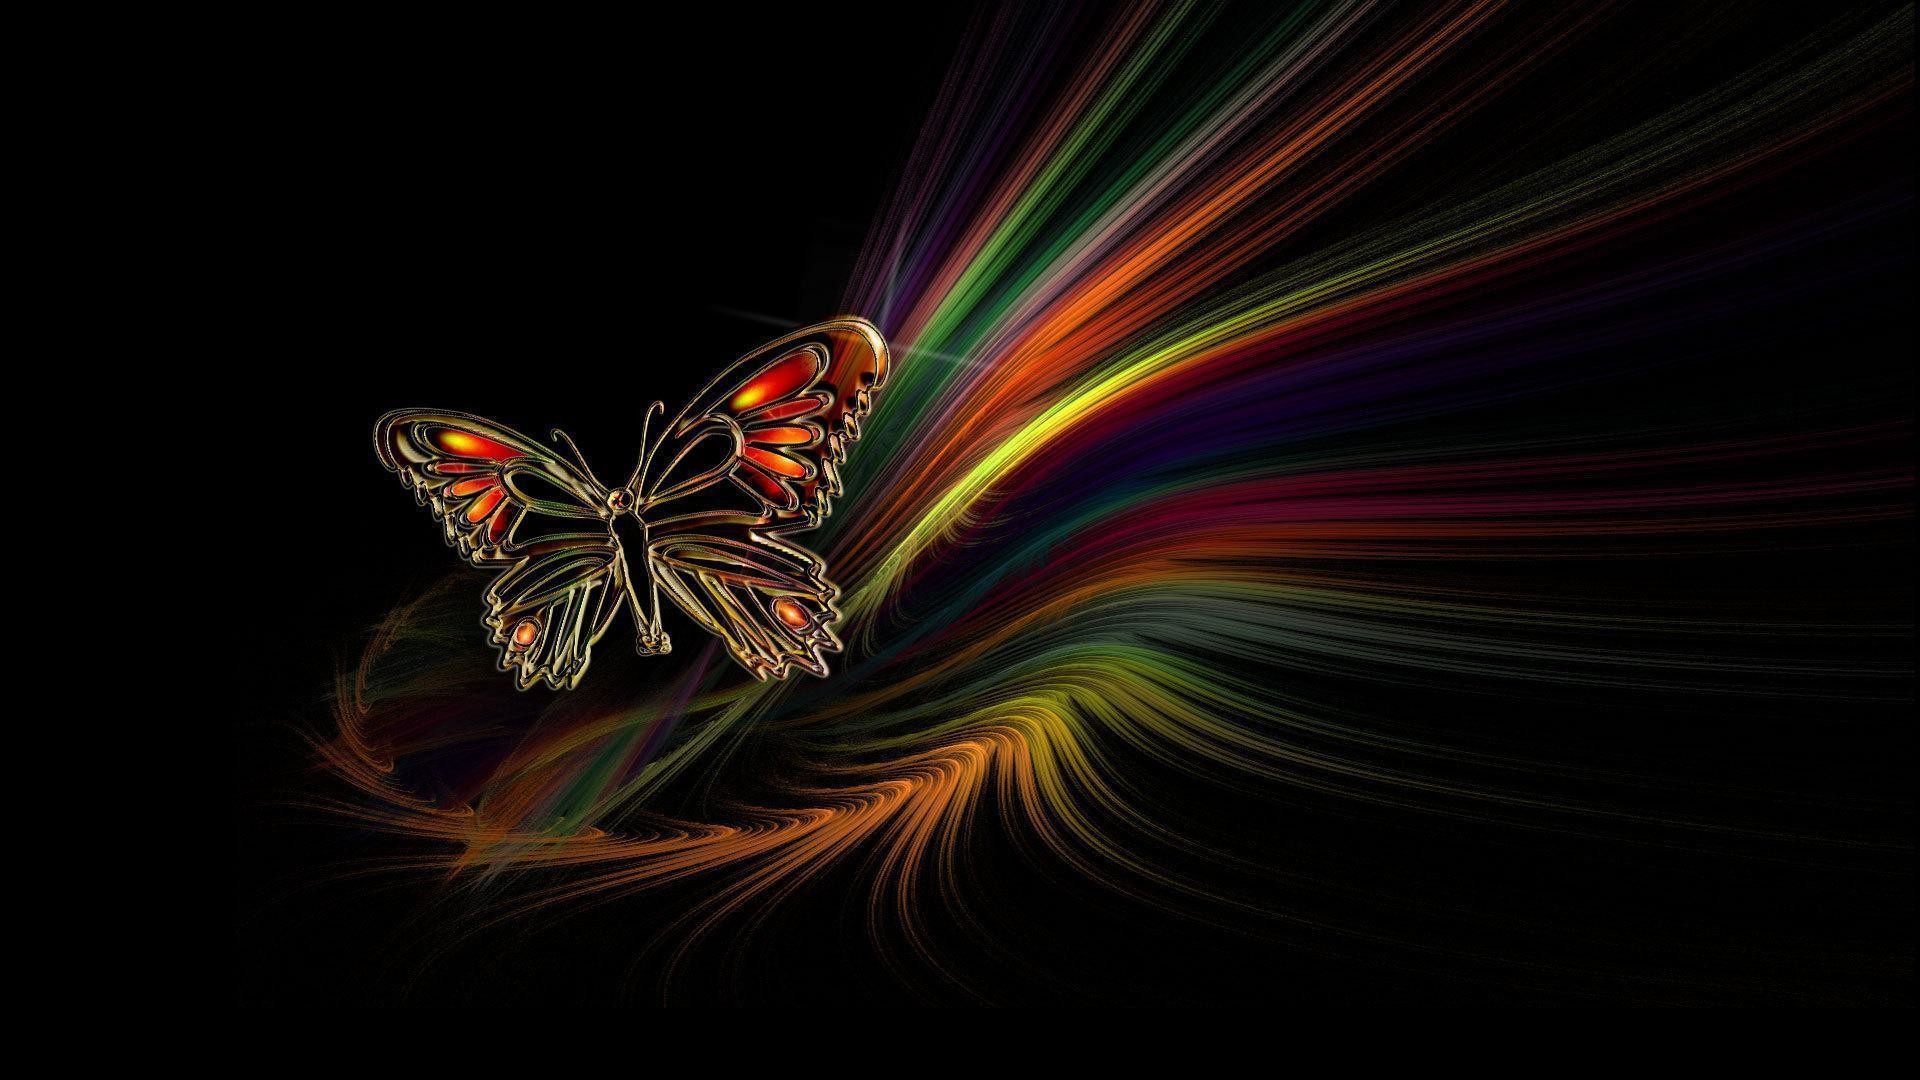 1920x1080 Beautiful Butterfly Abstract HD Wallpaper For Desktop Backgrounds .